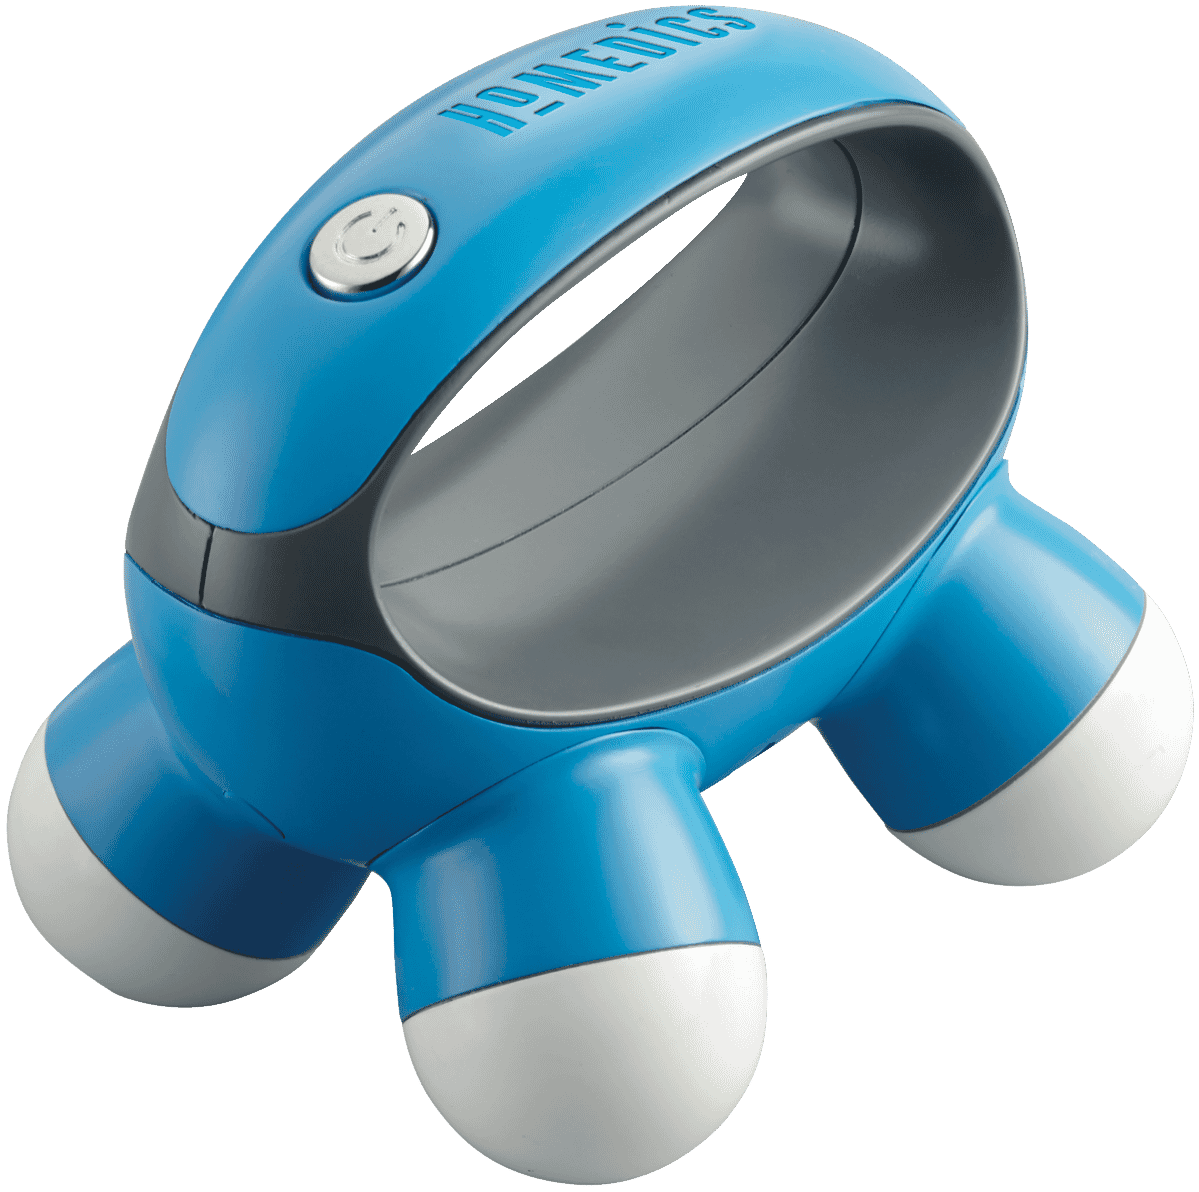 HoMedics QuaD Portable Electric Hand Held Vibration Massager Body/Back -  Blue